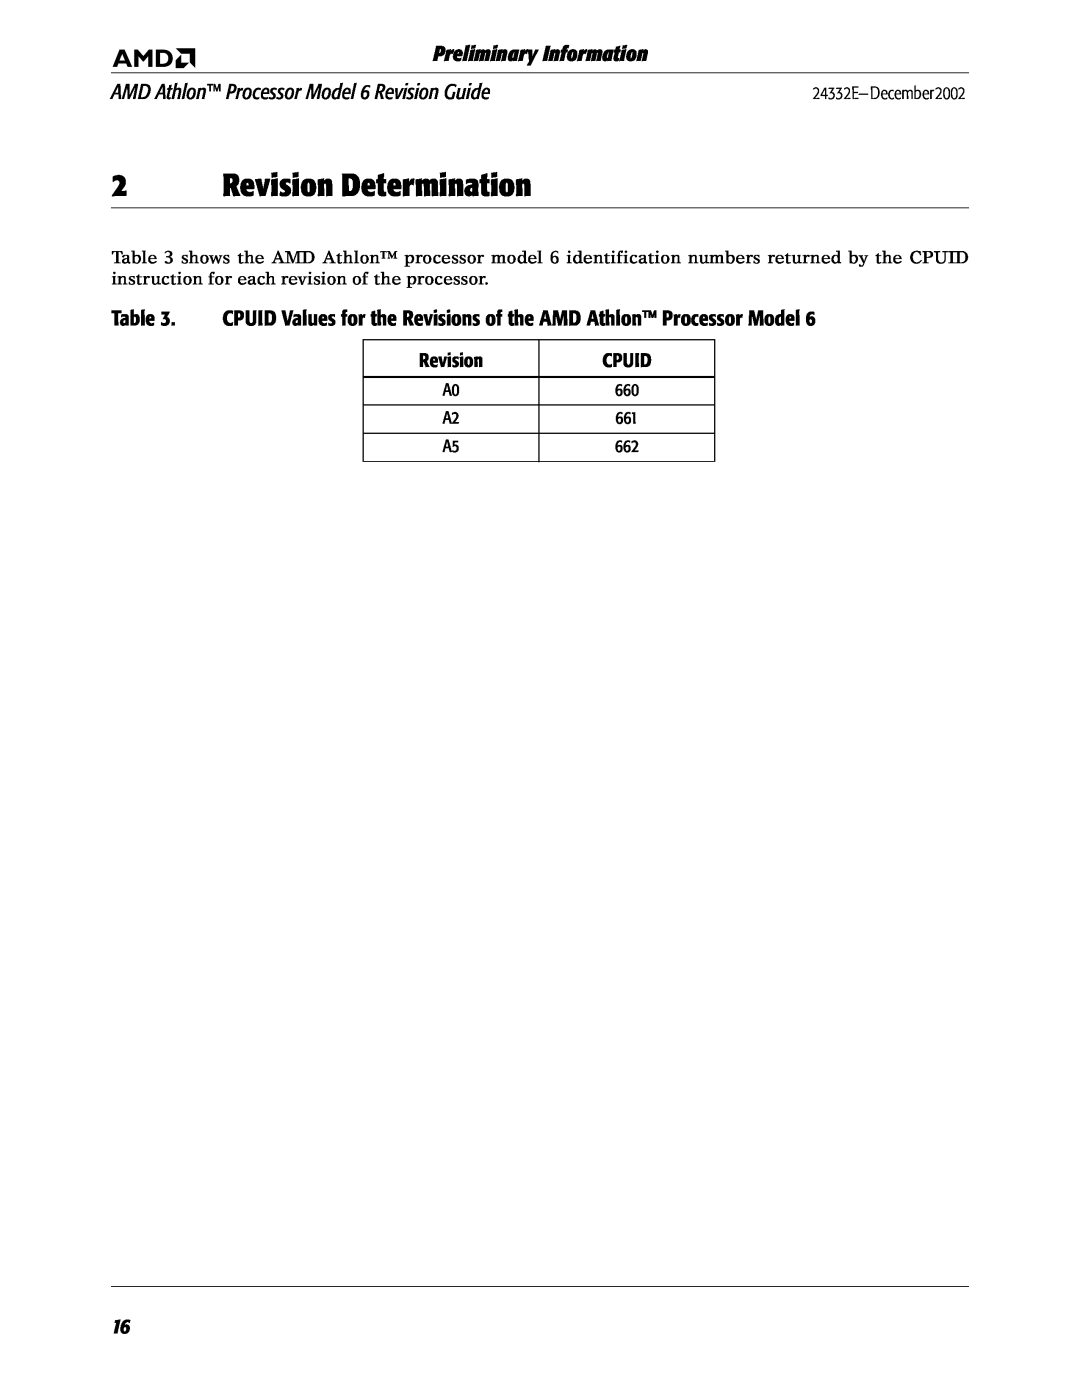 AMD manual Revision Determination, Preliminary Information, AMD Athlon Processor Model 6 Revision Guide, Cpuid 